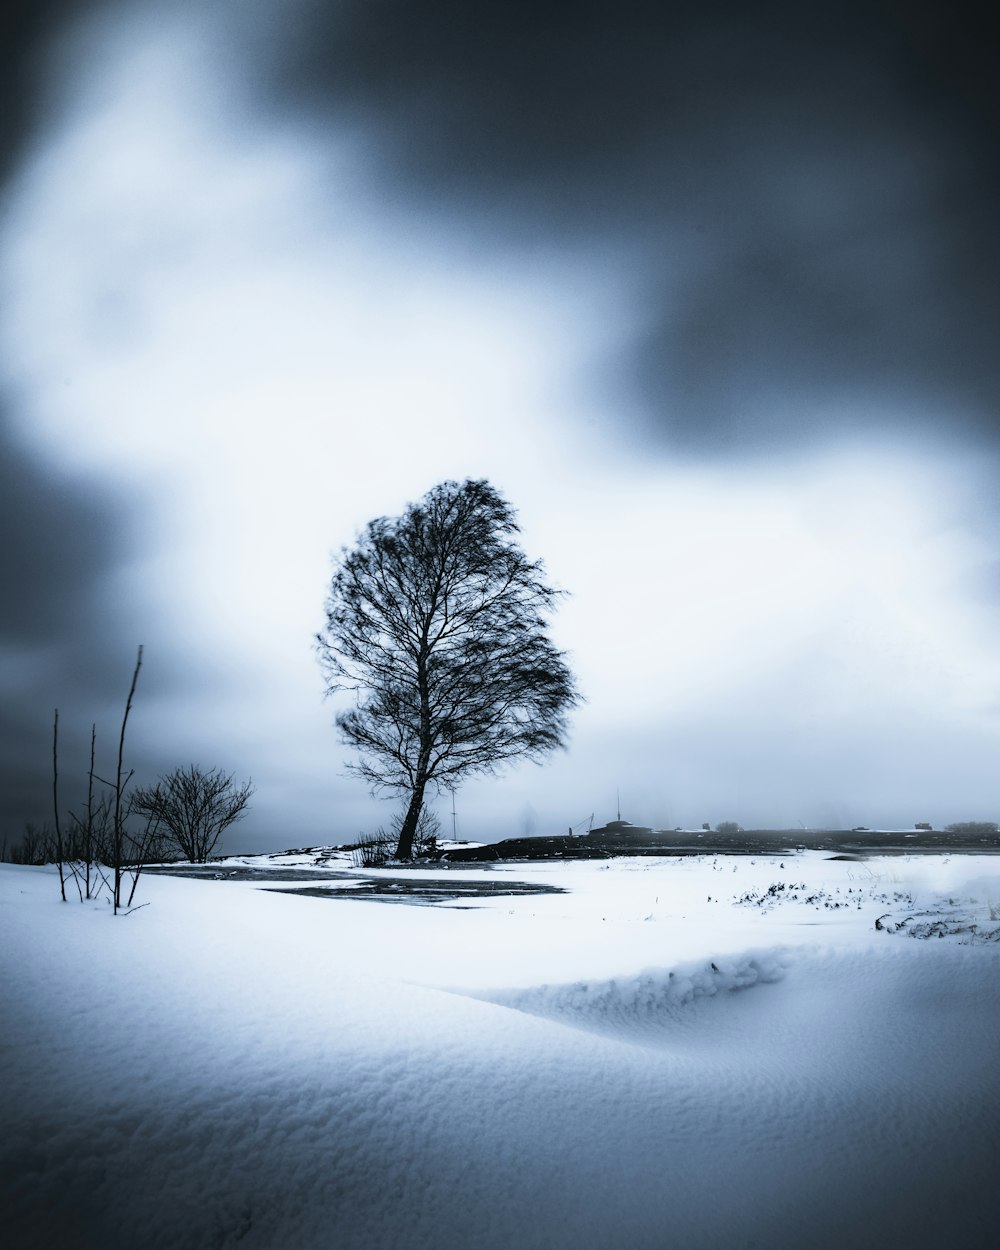 a lone tree in a snowy field under a cloudy sky